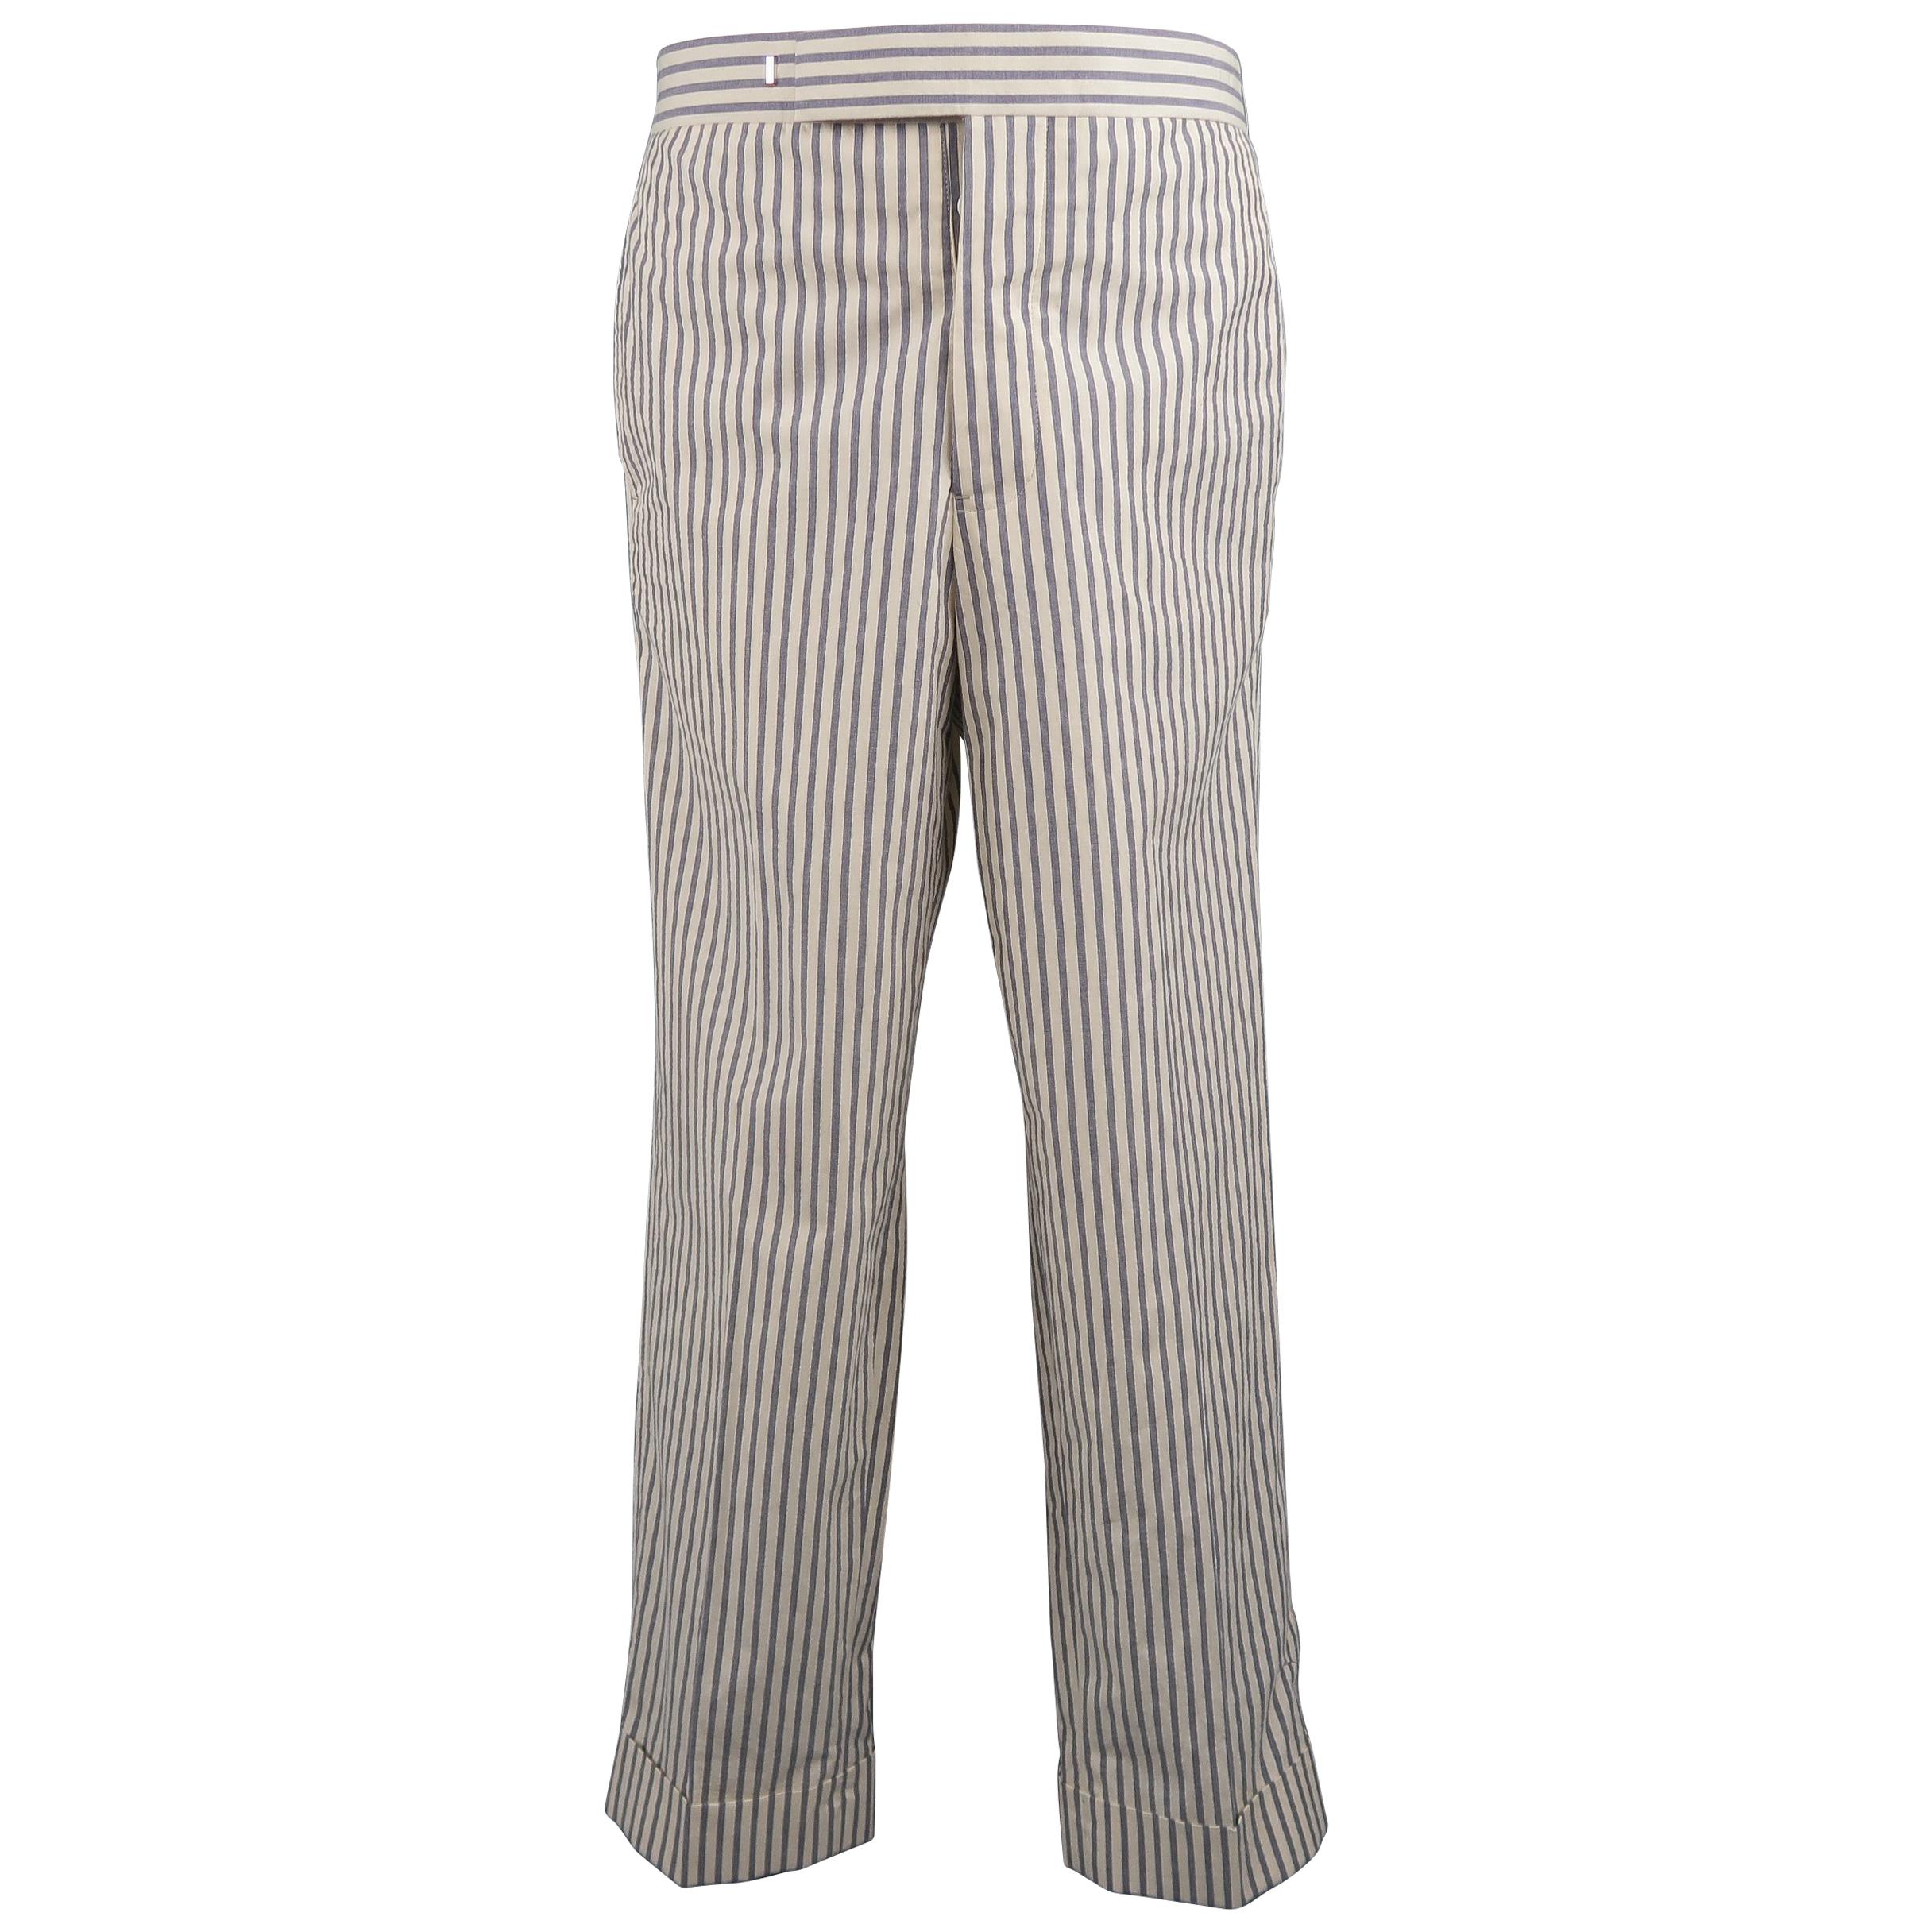 Black Fleece Beige and Gray Stripe Cotton Cuffed Pants